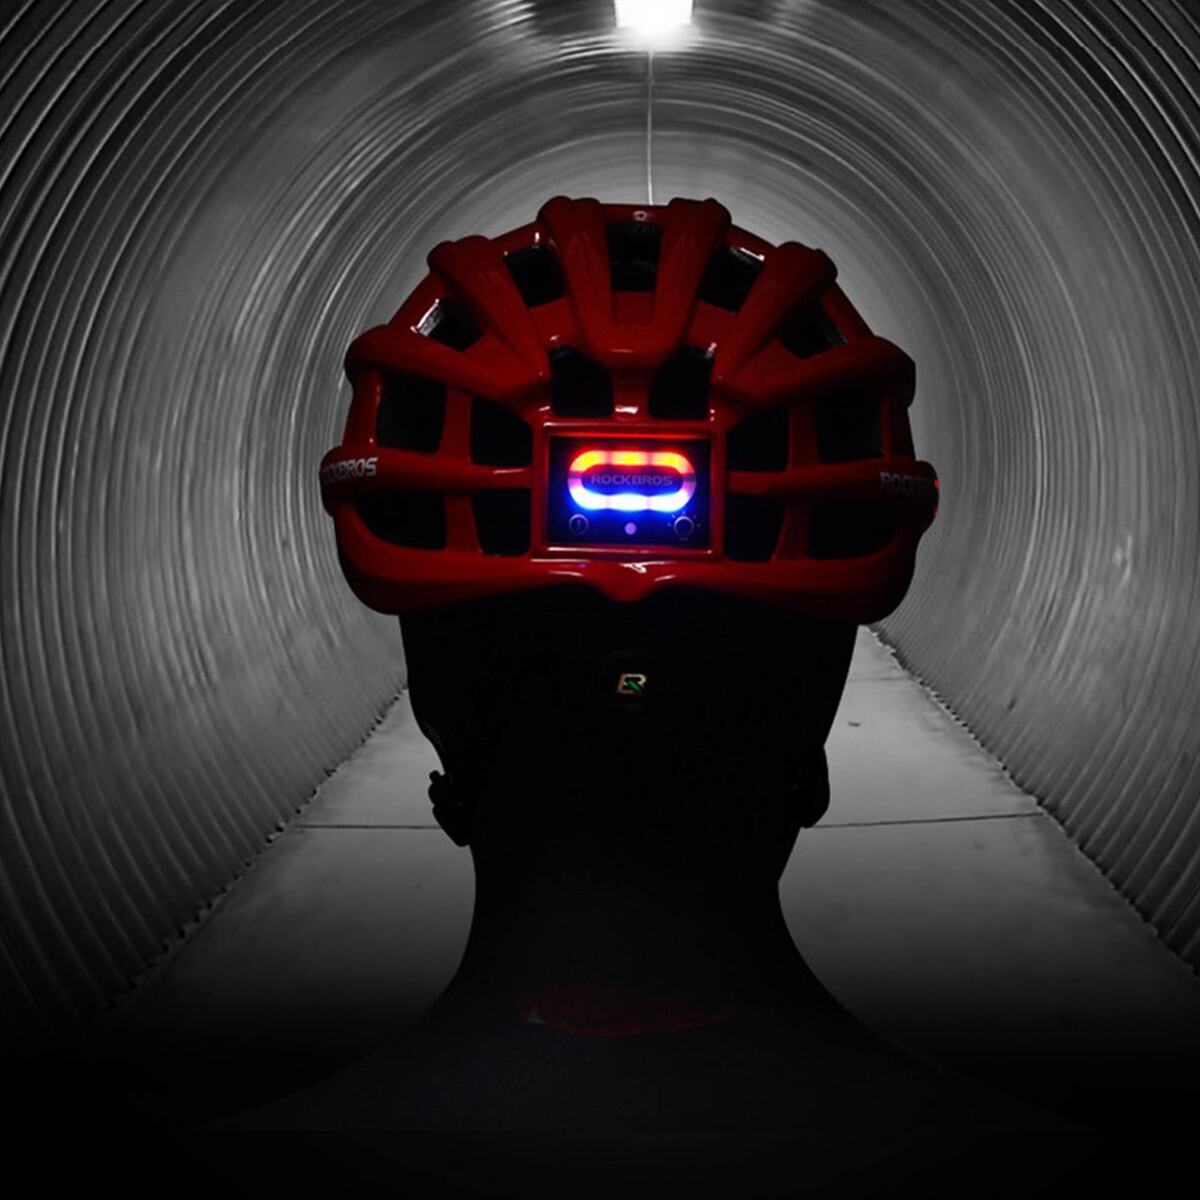 ROCKBROS Cycling Helmet With Light ZN1001-BL Blue